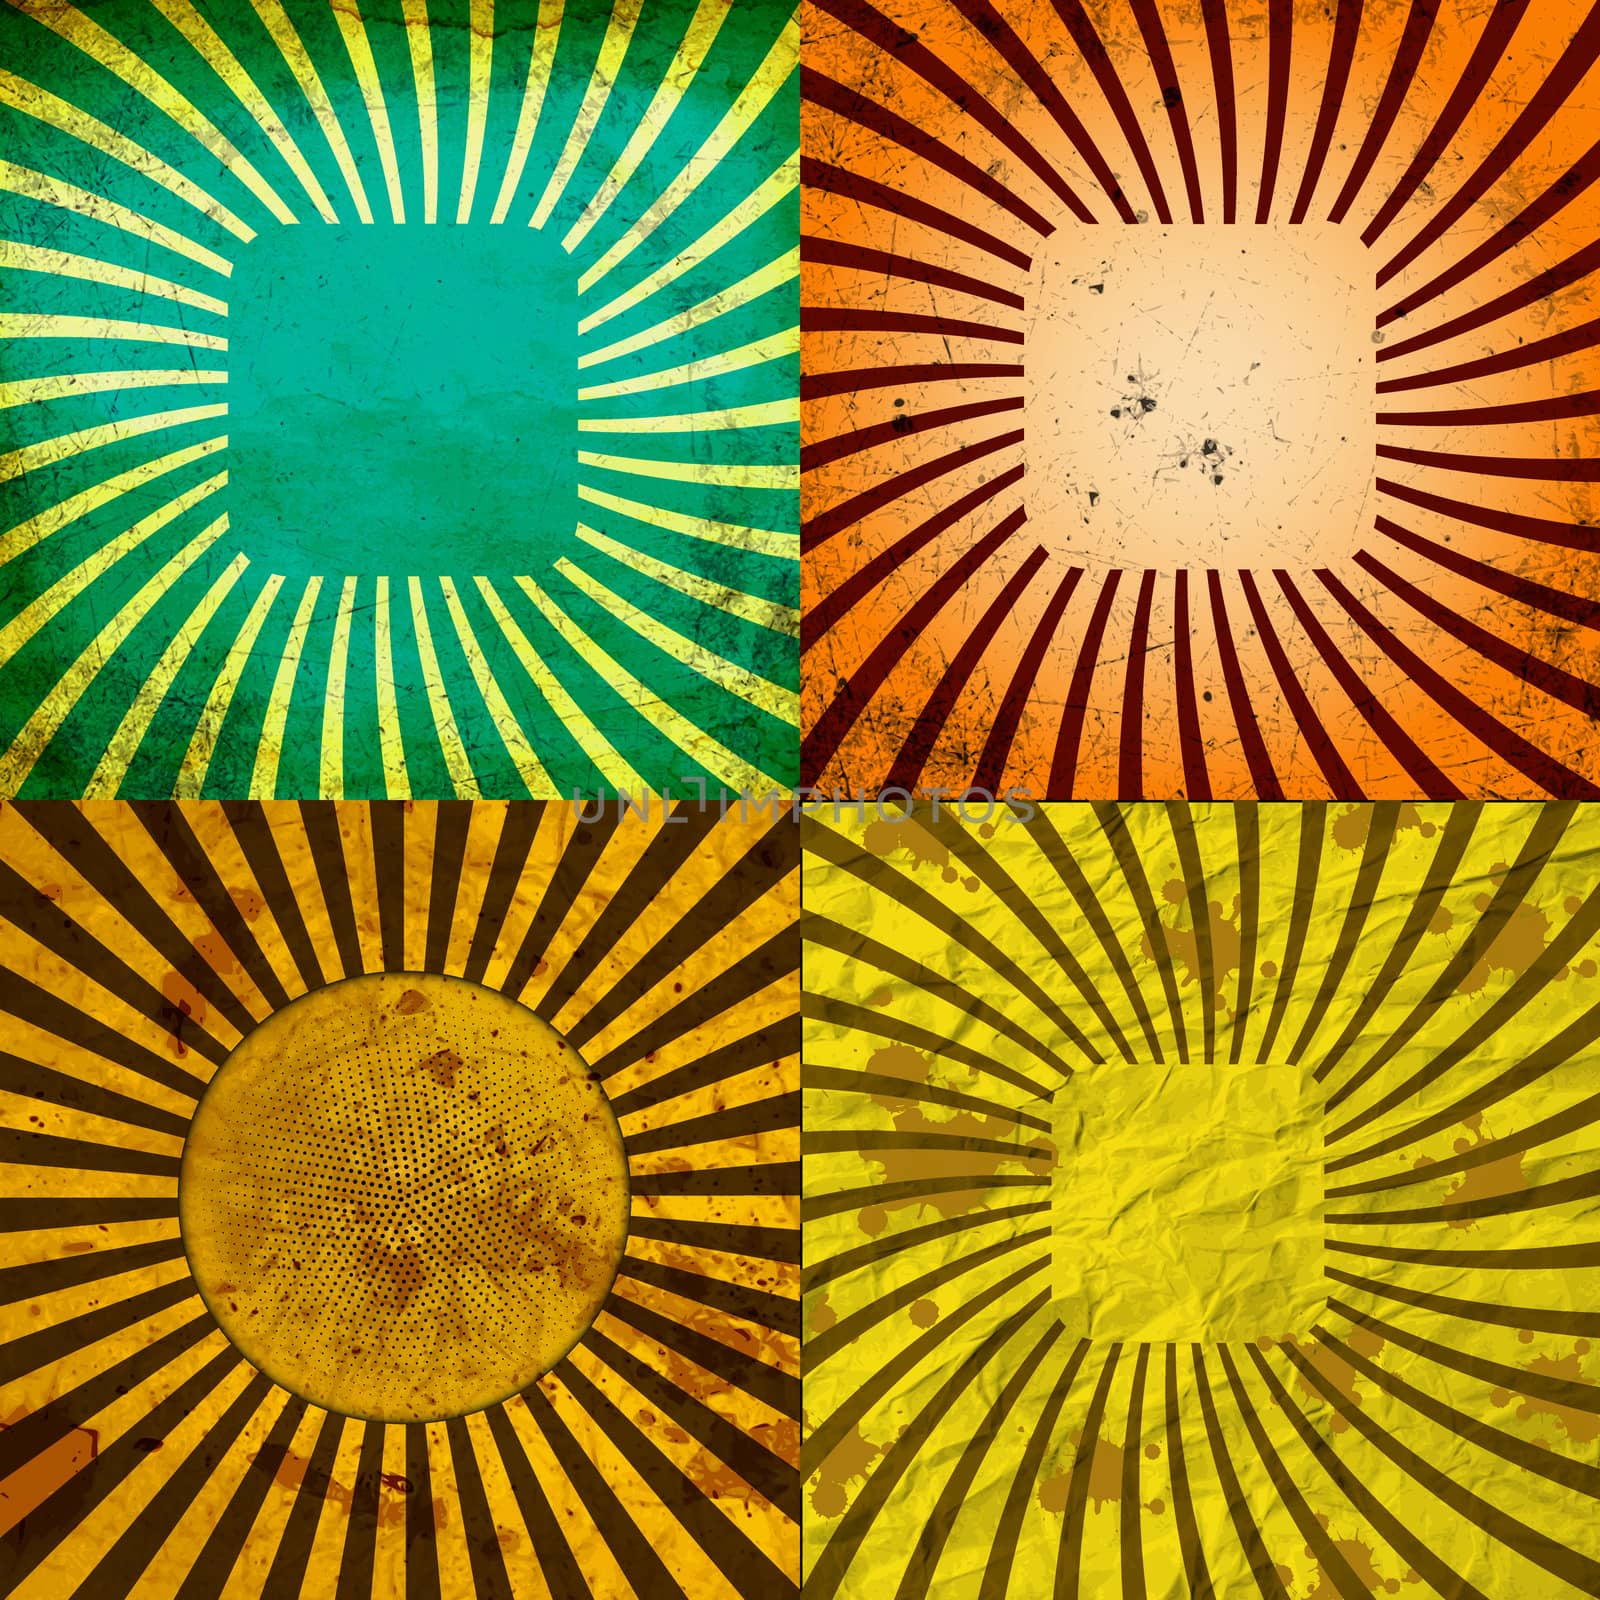 Sunburst Retro Textured Grunge Background Set. Vintage Rays.  illustration